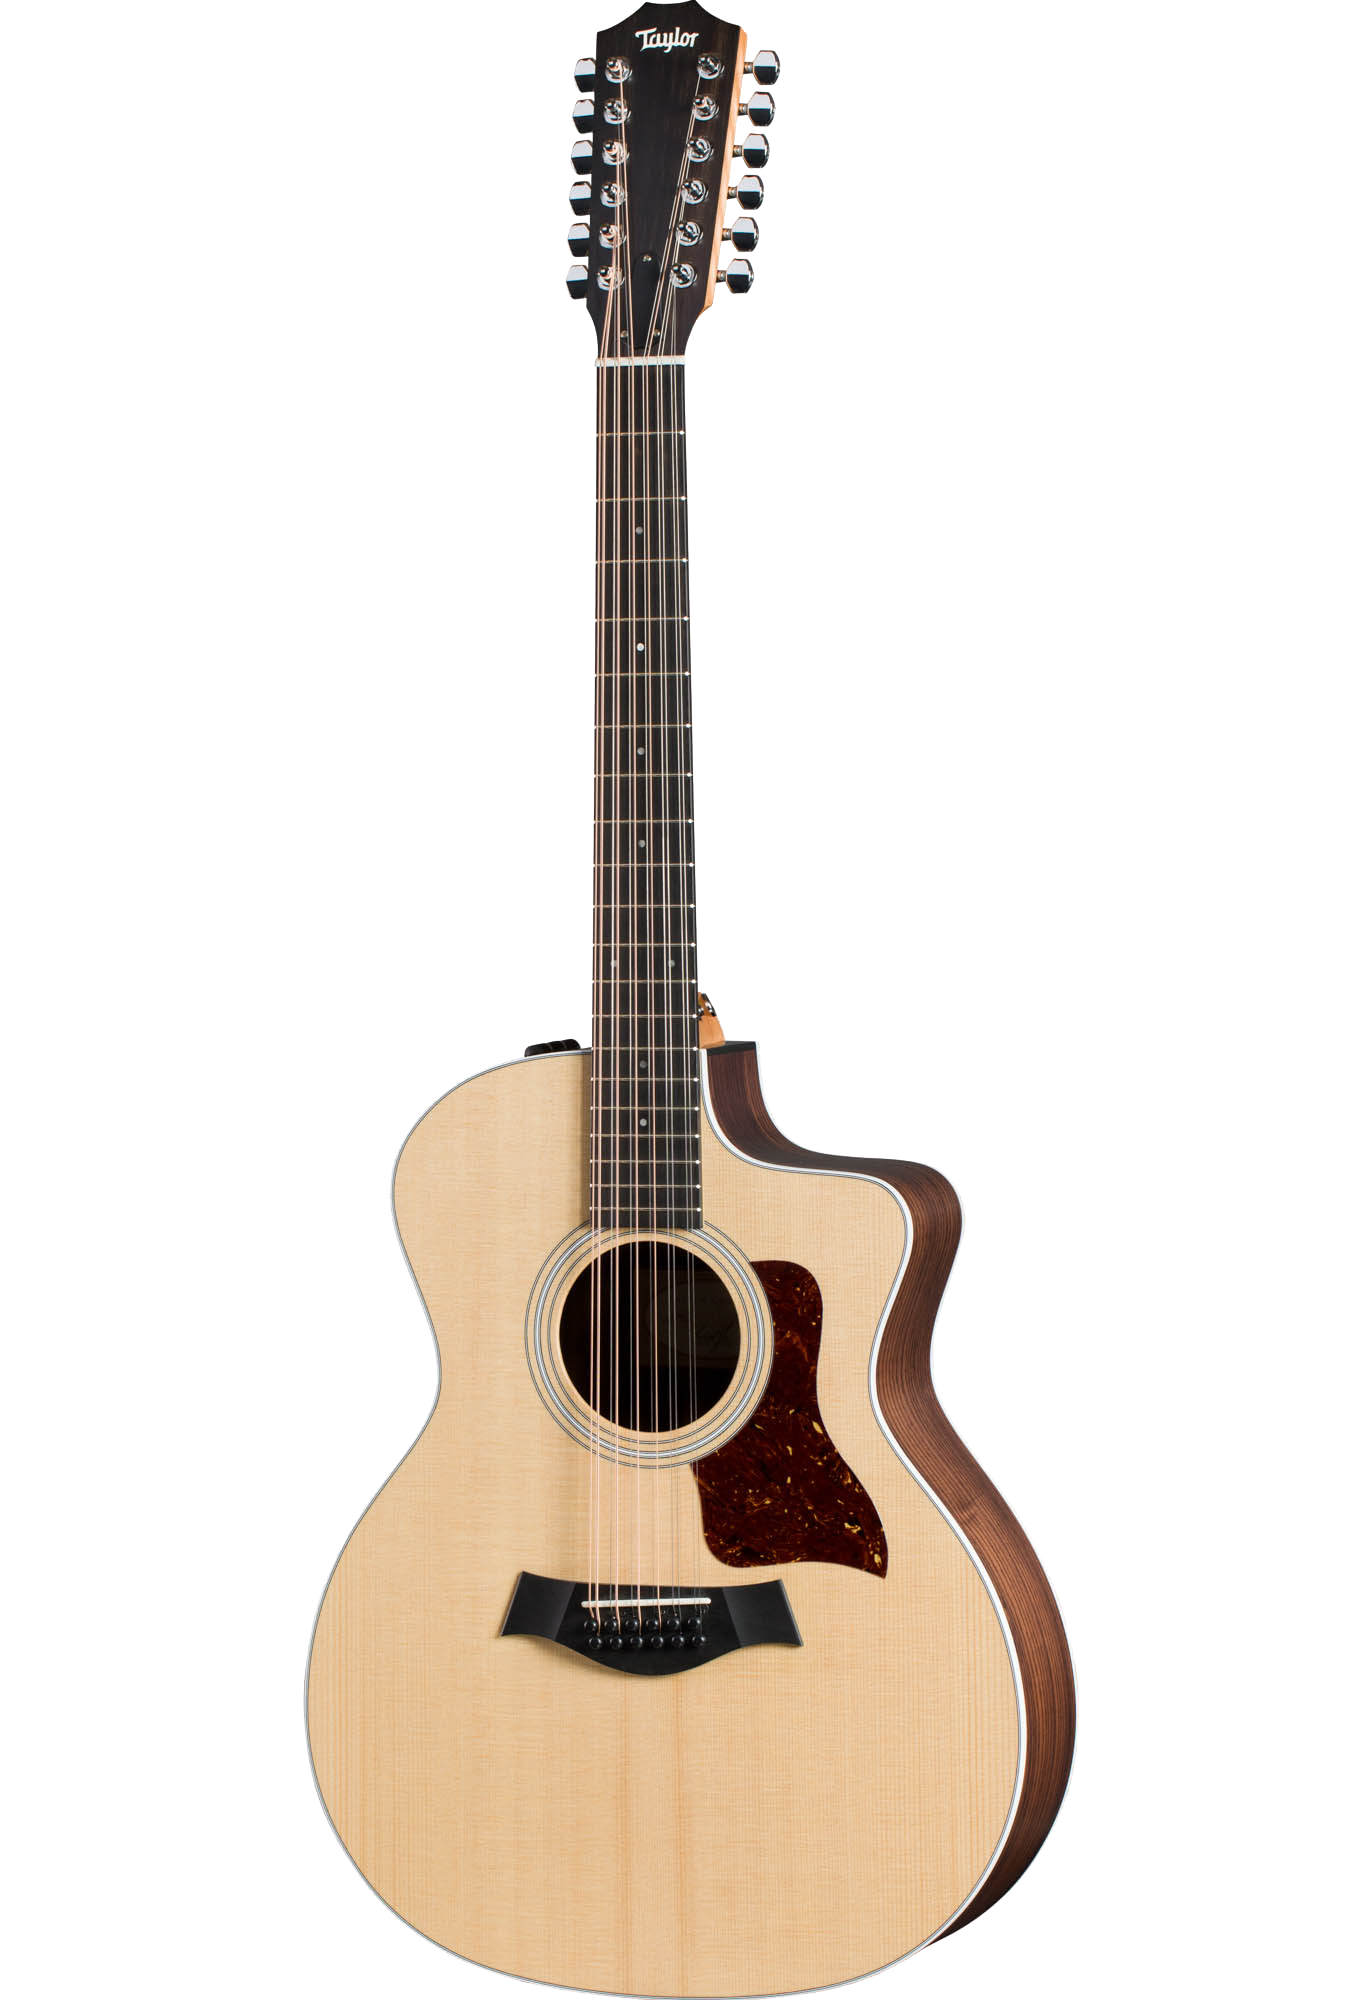 Taylor 254ce 12-string Acoustic Guitar Tone Shop Guitars Dallas Fort Worth TX